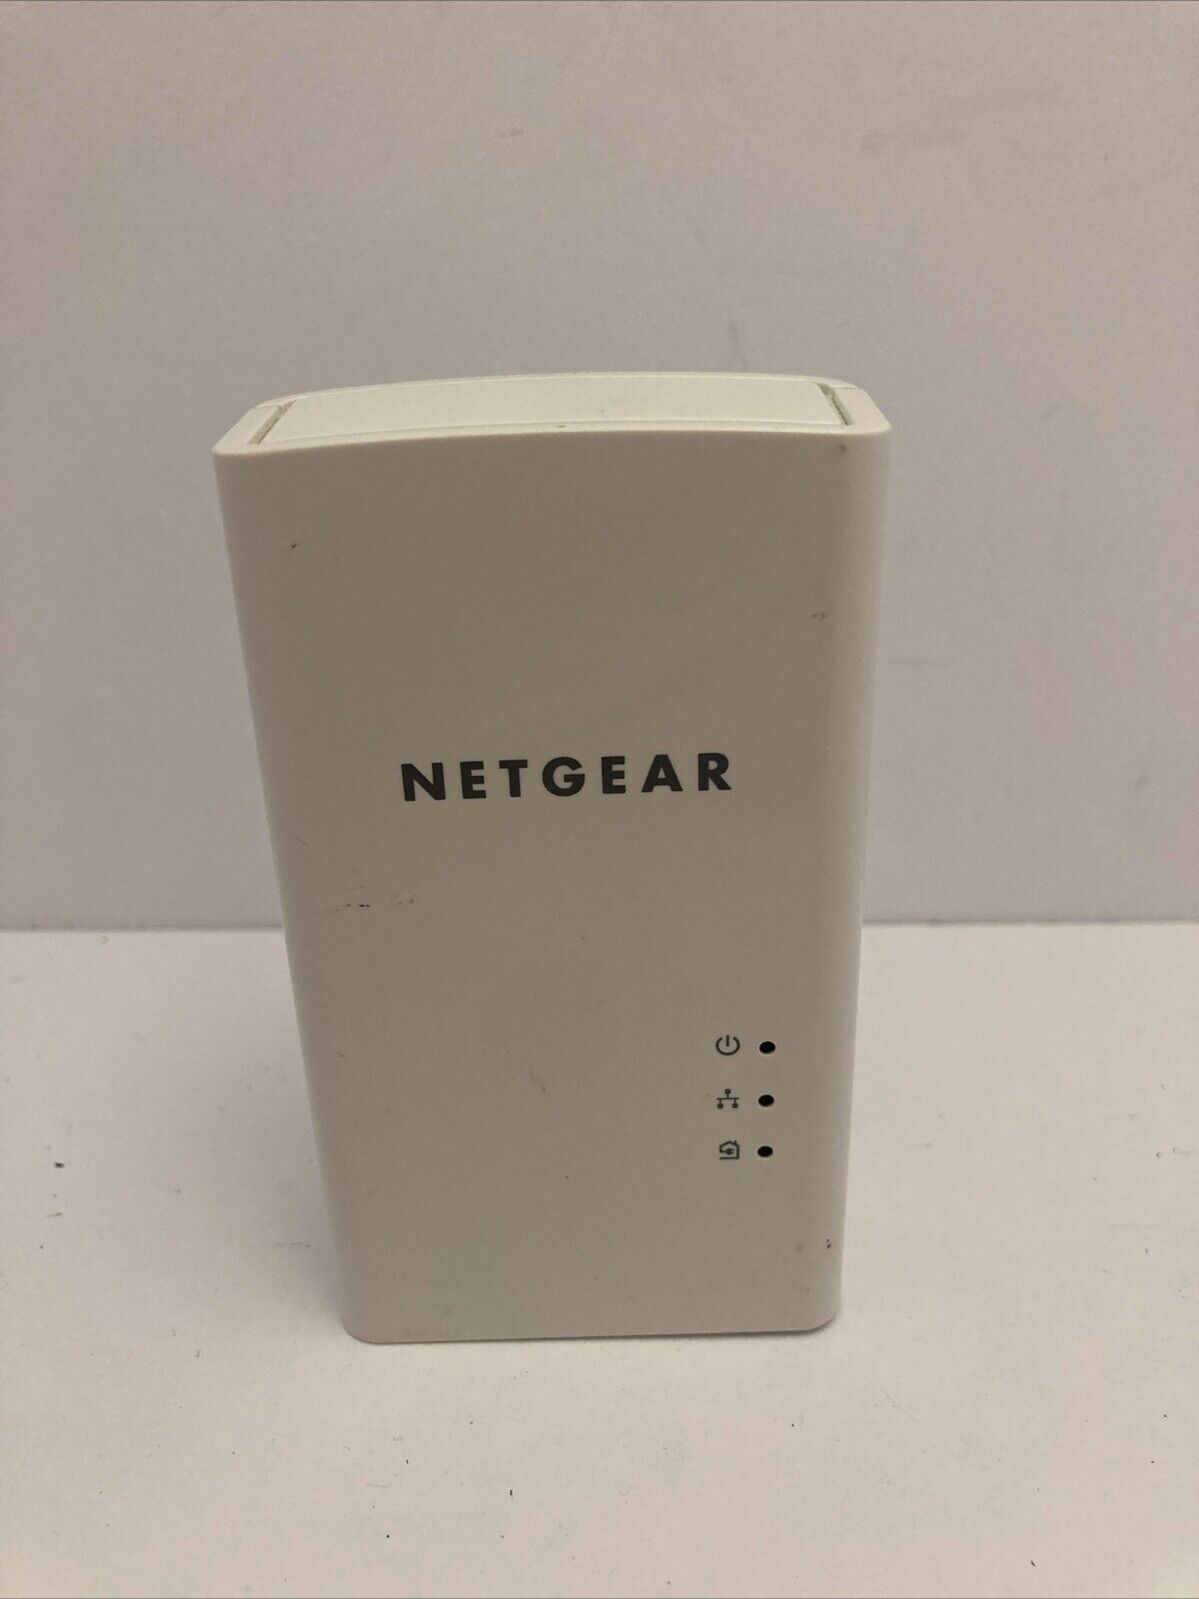 NETGEAR POWERLINE 1000 - PL1000 Access Point - Working